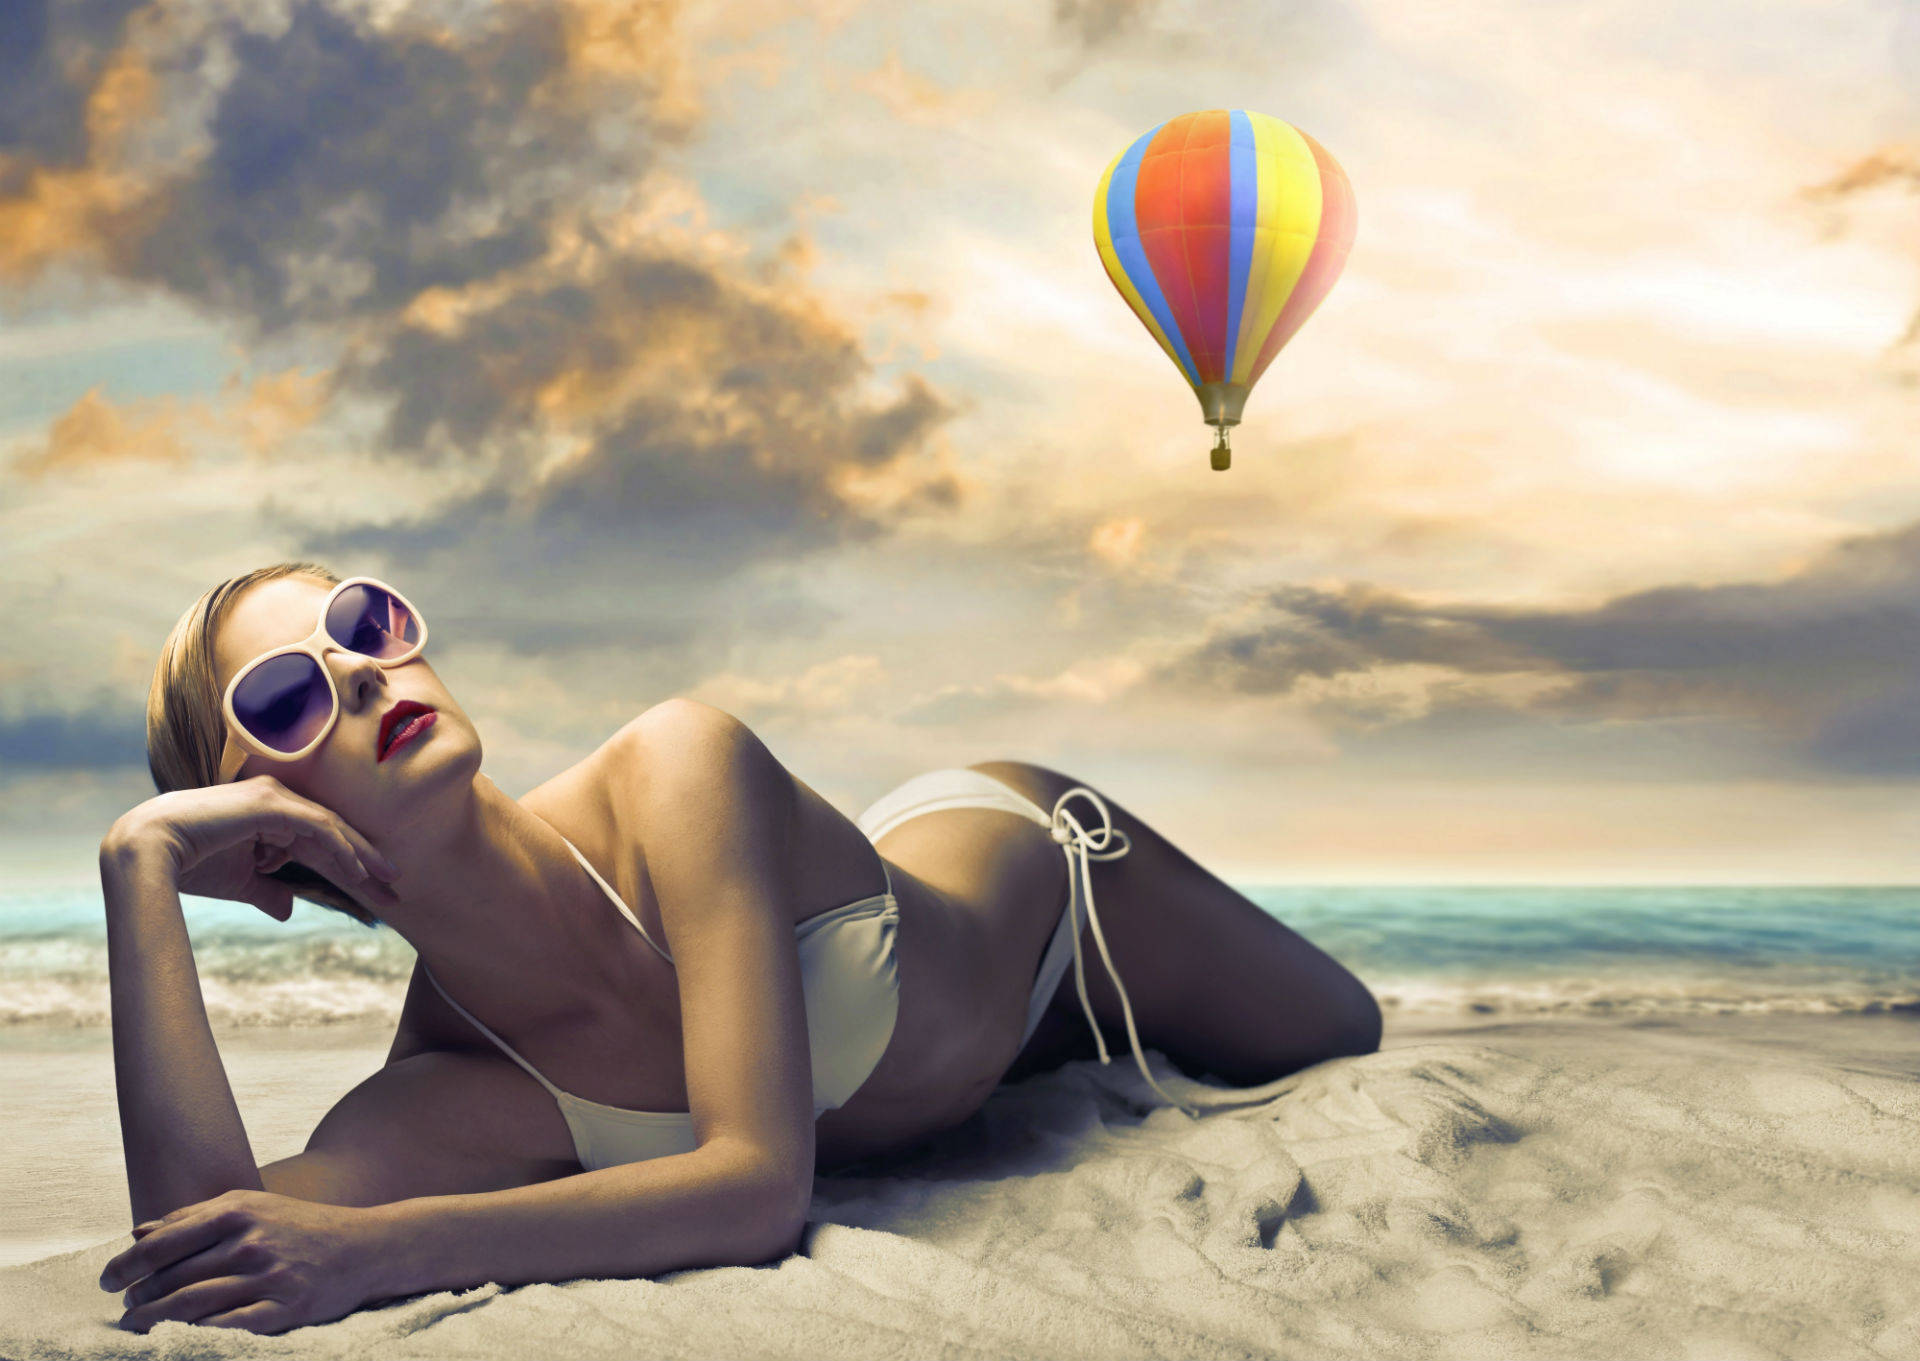 Bikini Girl And Hot Air Balloon Picture